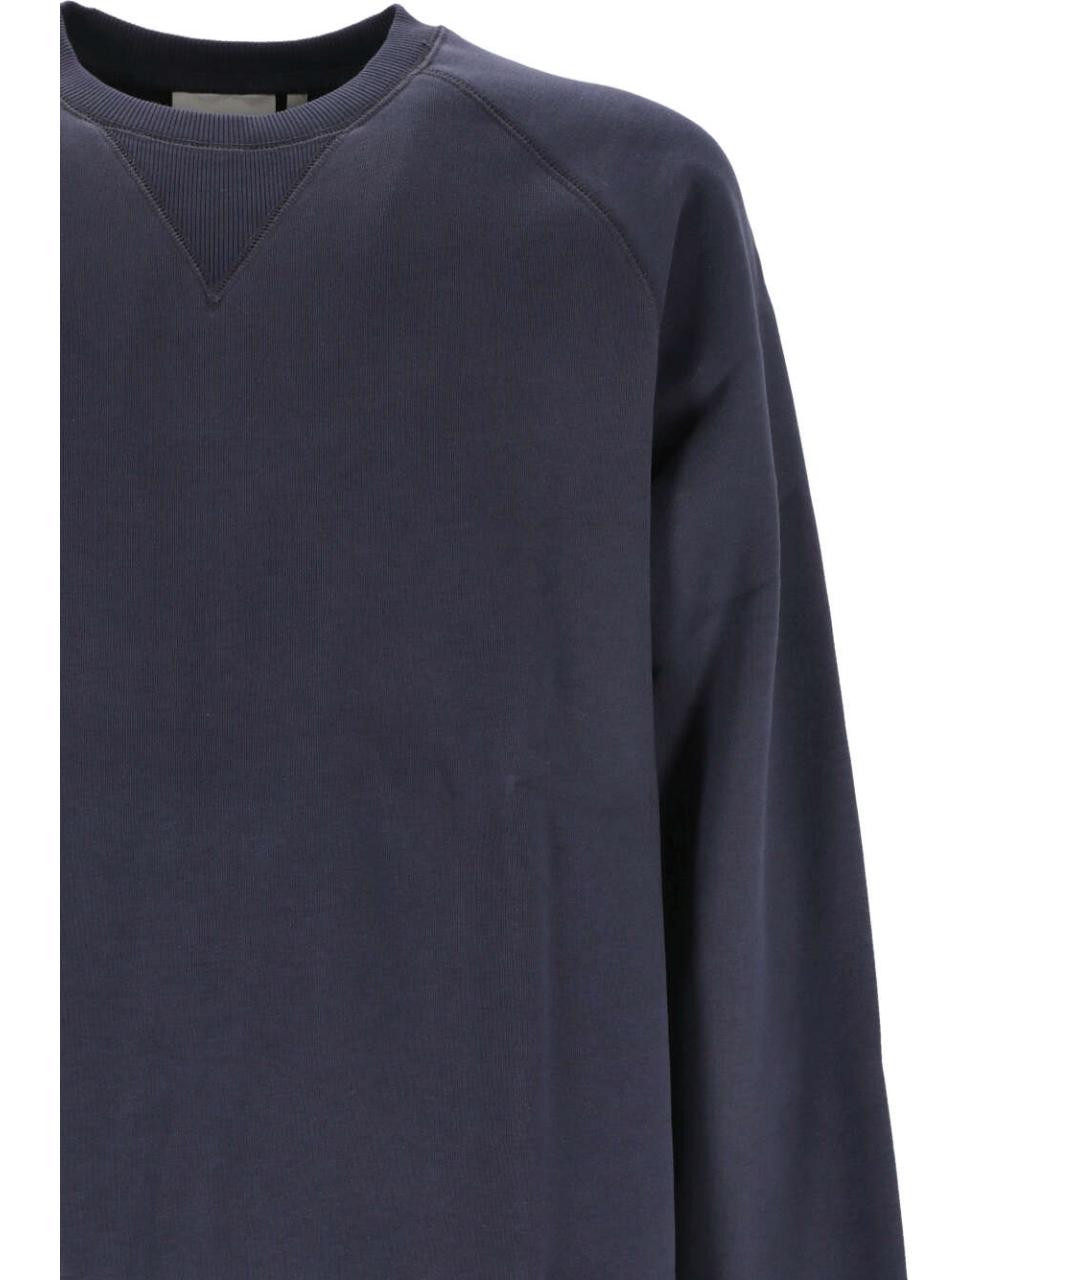 CARHARTT WIP Темно-синий джемпер / свитер, фото 2